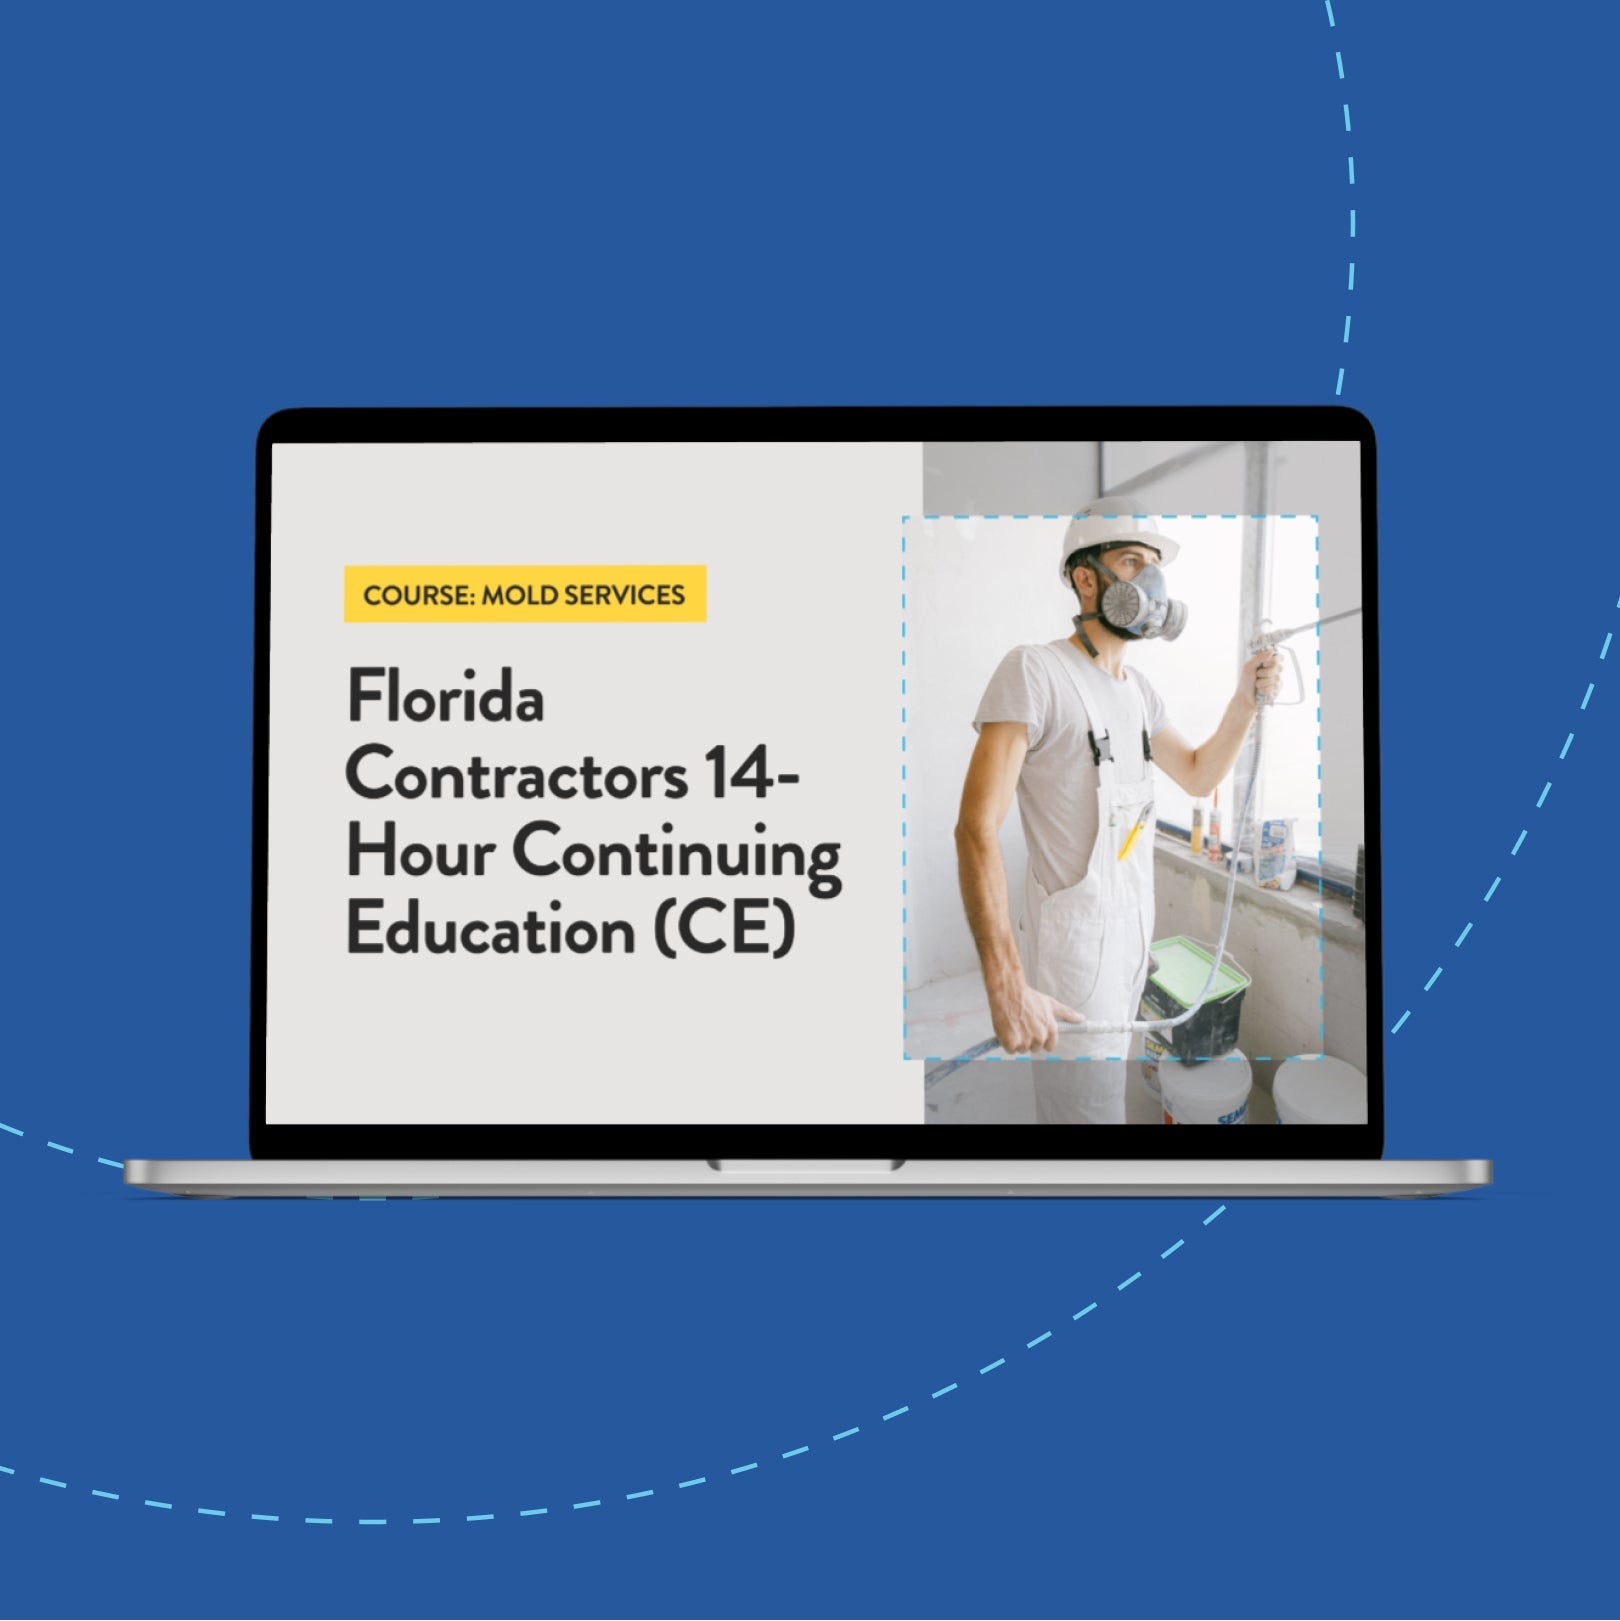 Florida Contractors 14-Hour Continuing Education (CE) Course: Mold Services